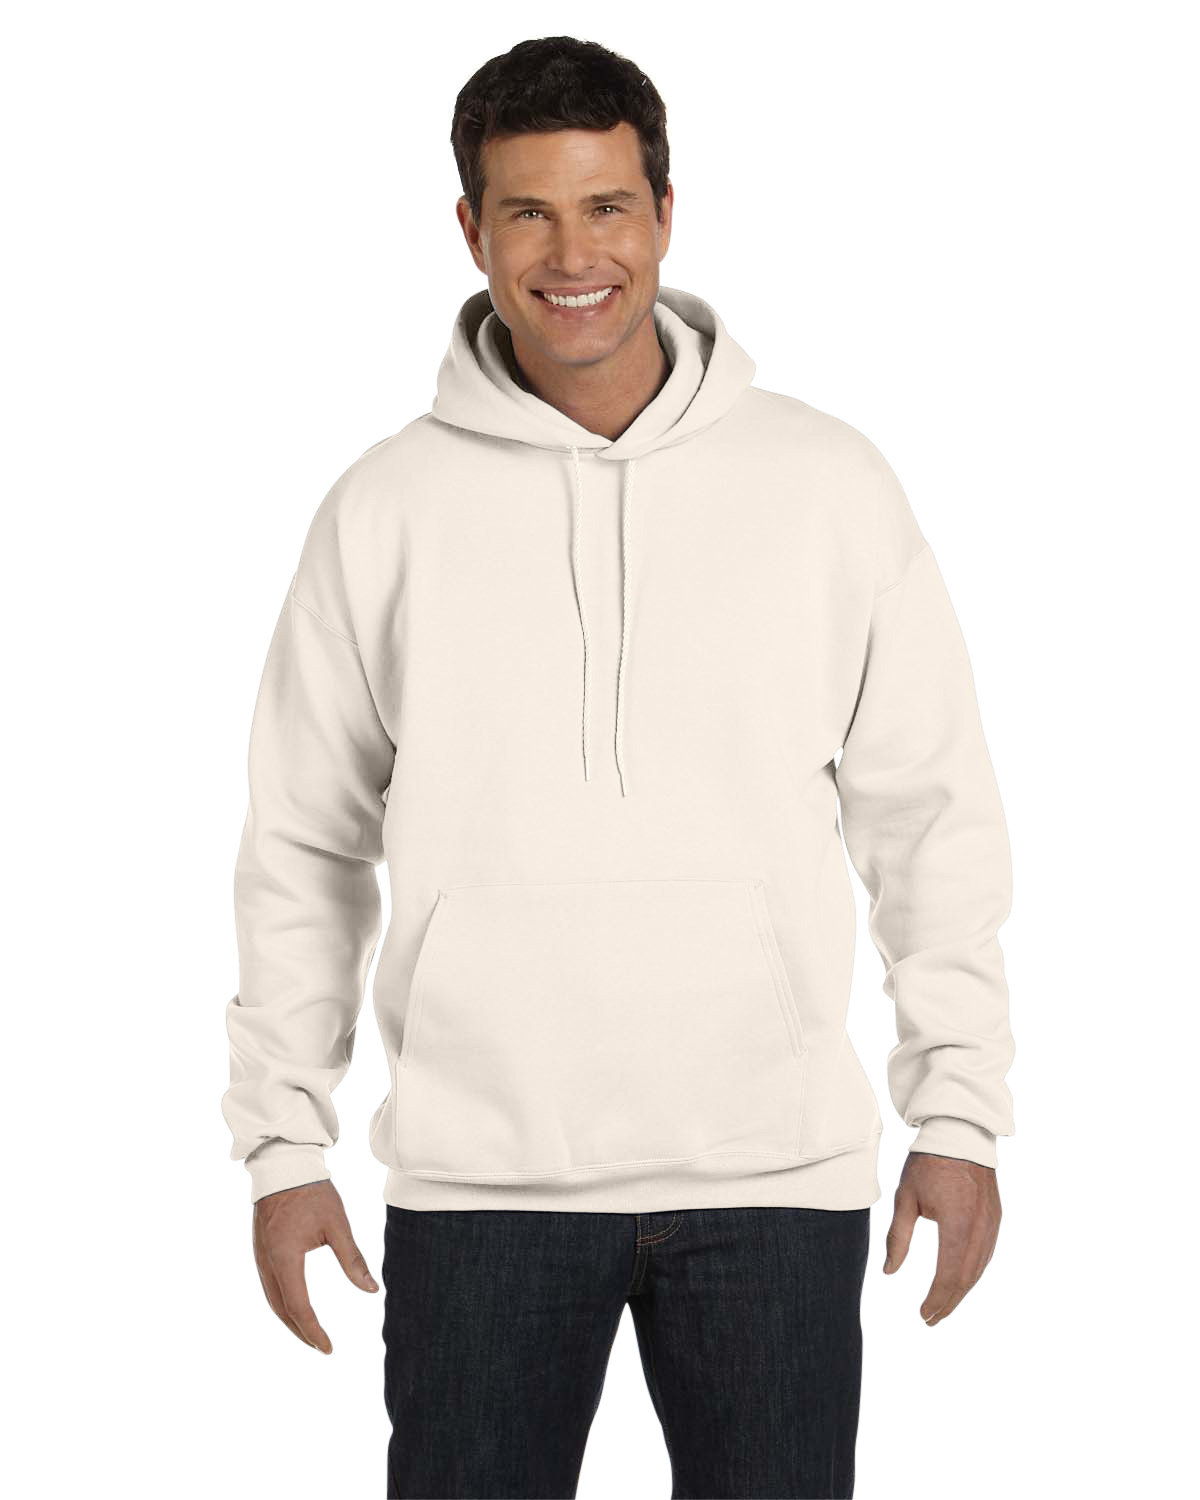 https://images.shirtspace.com/fullsize/zSTaeJ0StM4oT9xj%2BwRB3g%3D%3D/356137/1184-hanes-f170-adult-9-7-oz-ultimate-cotton-90-10-pullover-hooded-sweatshirt-front-natural.jpg